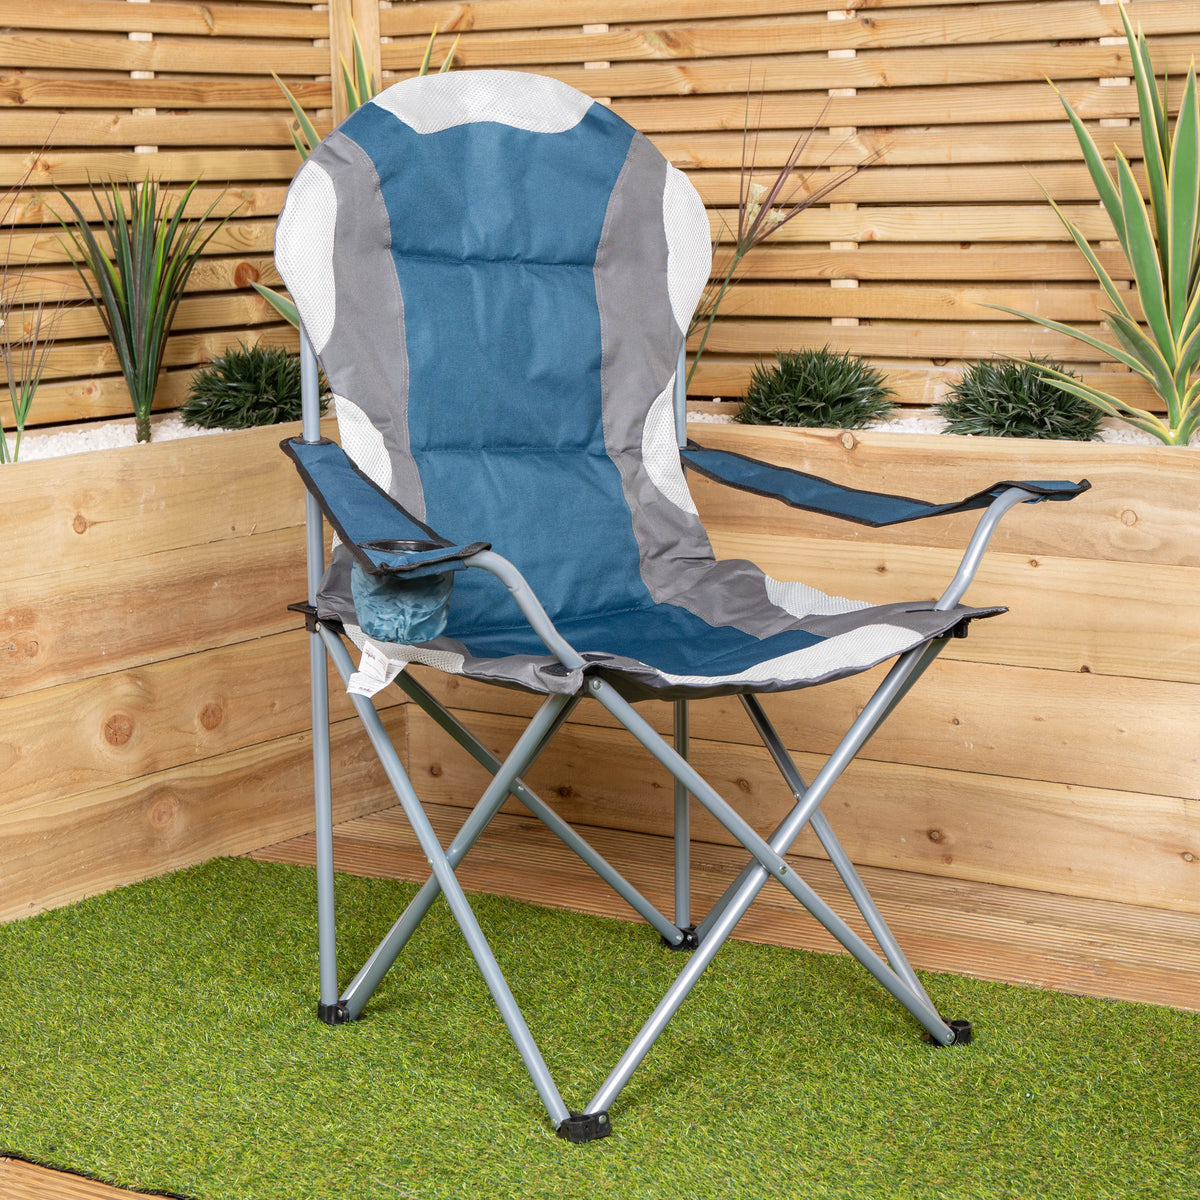 Berkley Folding Lightweight Padded High Back Relaxer Camping Chair in Indigo Blue